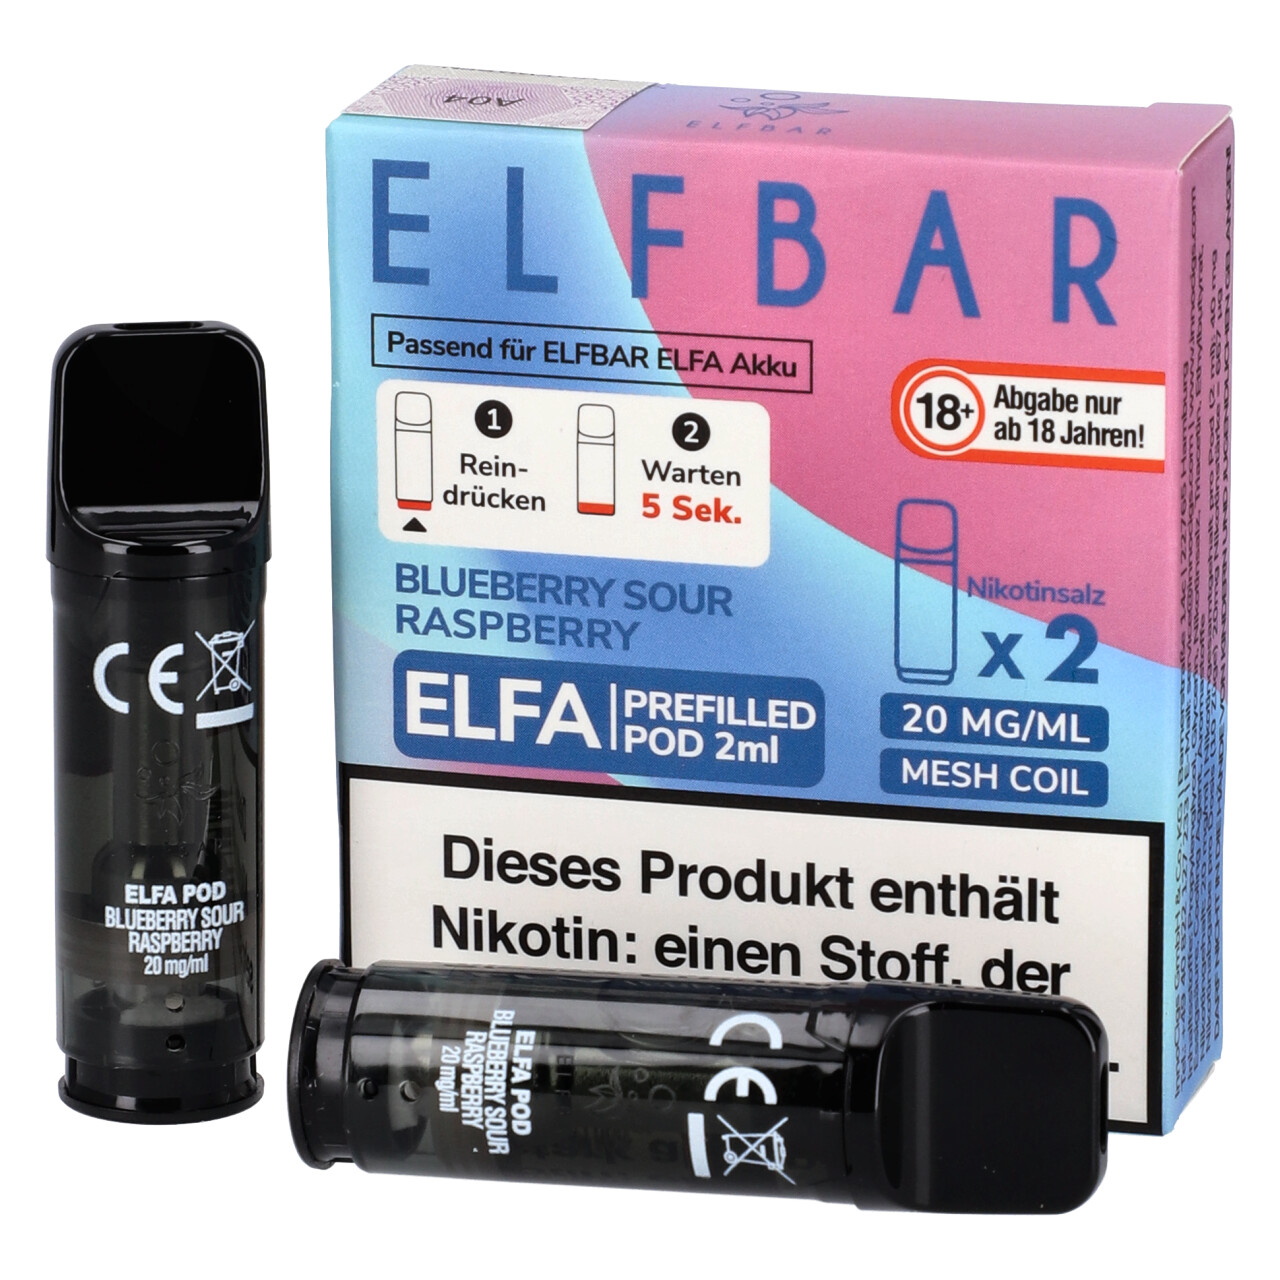 Elf Bar ELFA Pod Blaubeere saure Himbeere (Blueberry Sour Raspberry), 2ml Liquid, 2-er Pack